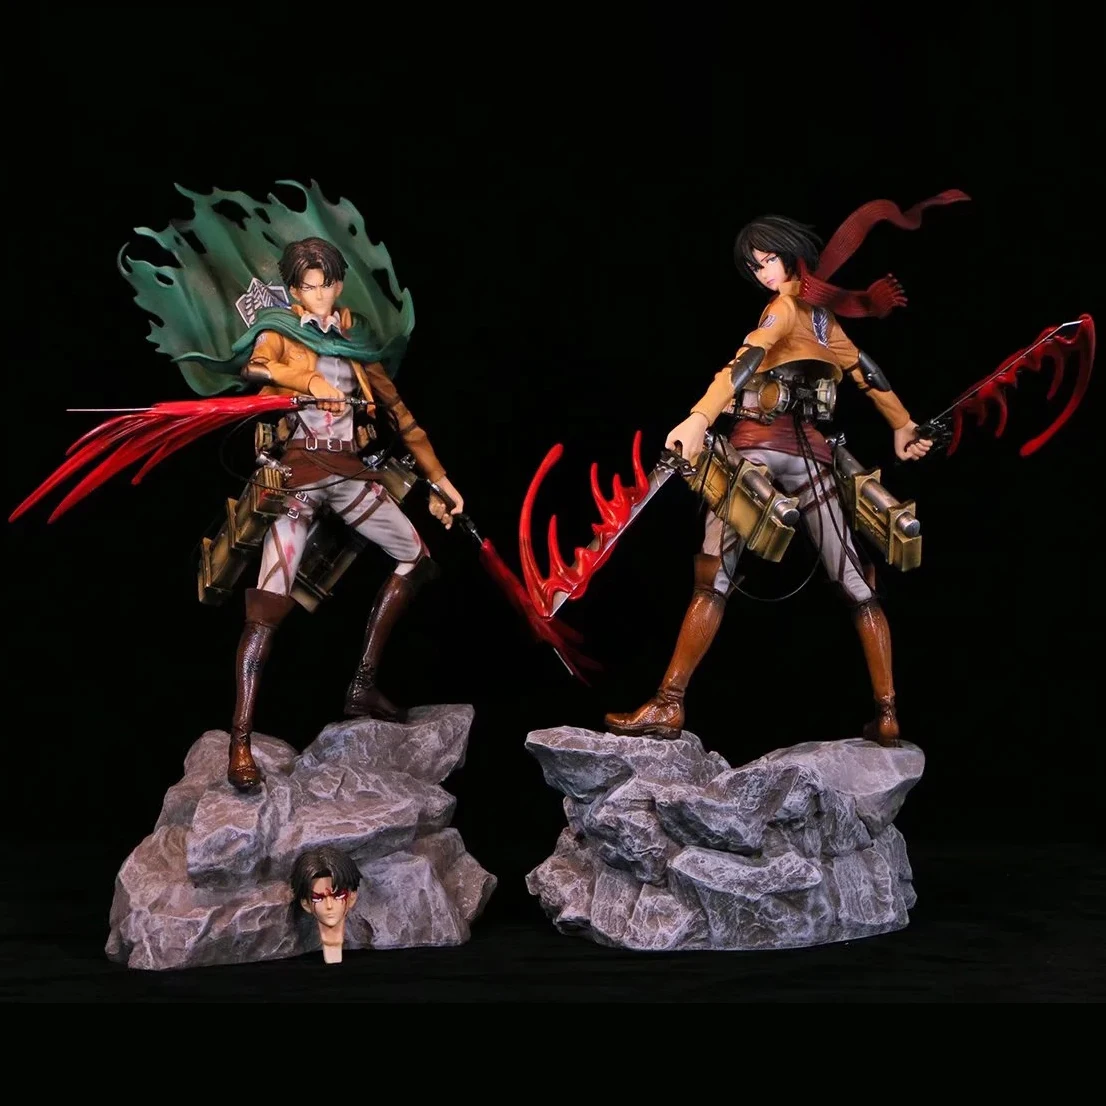 

33-35cm Anime Attack on Titan Figure GK Levi Mikasa Ackerman Battle Damaged Edition PVC Action Figurine Statue Model Toys Doll